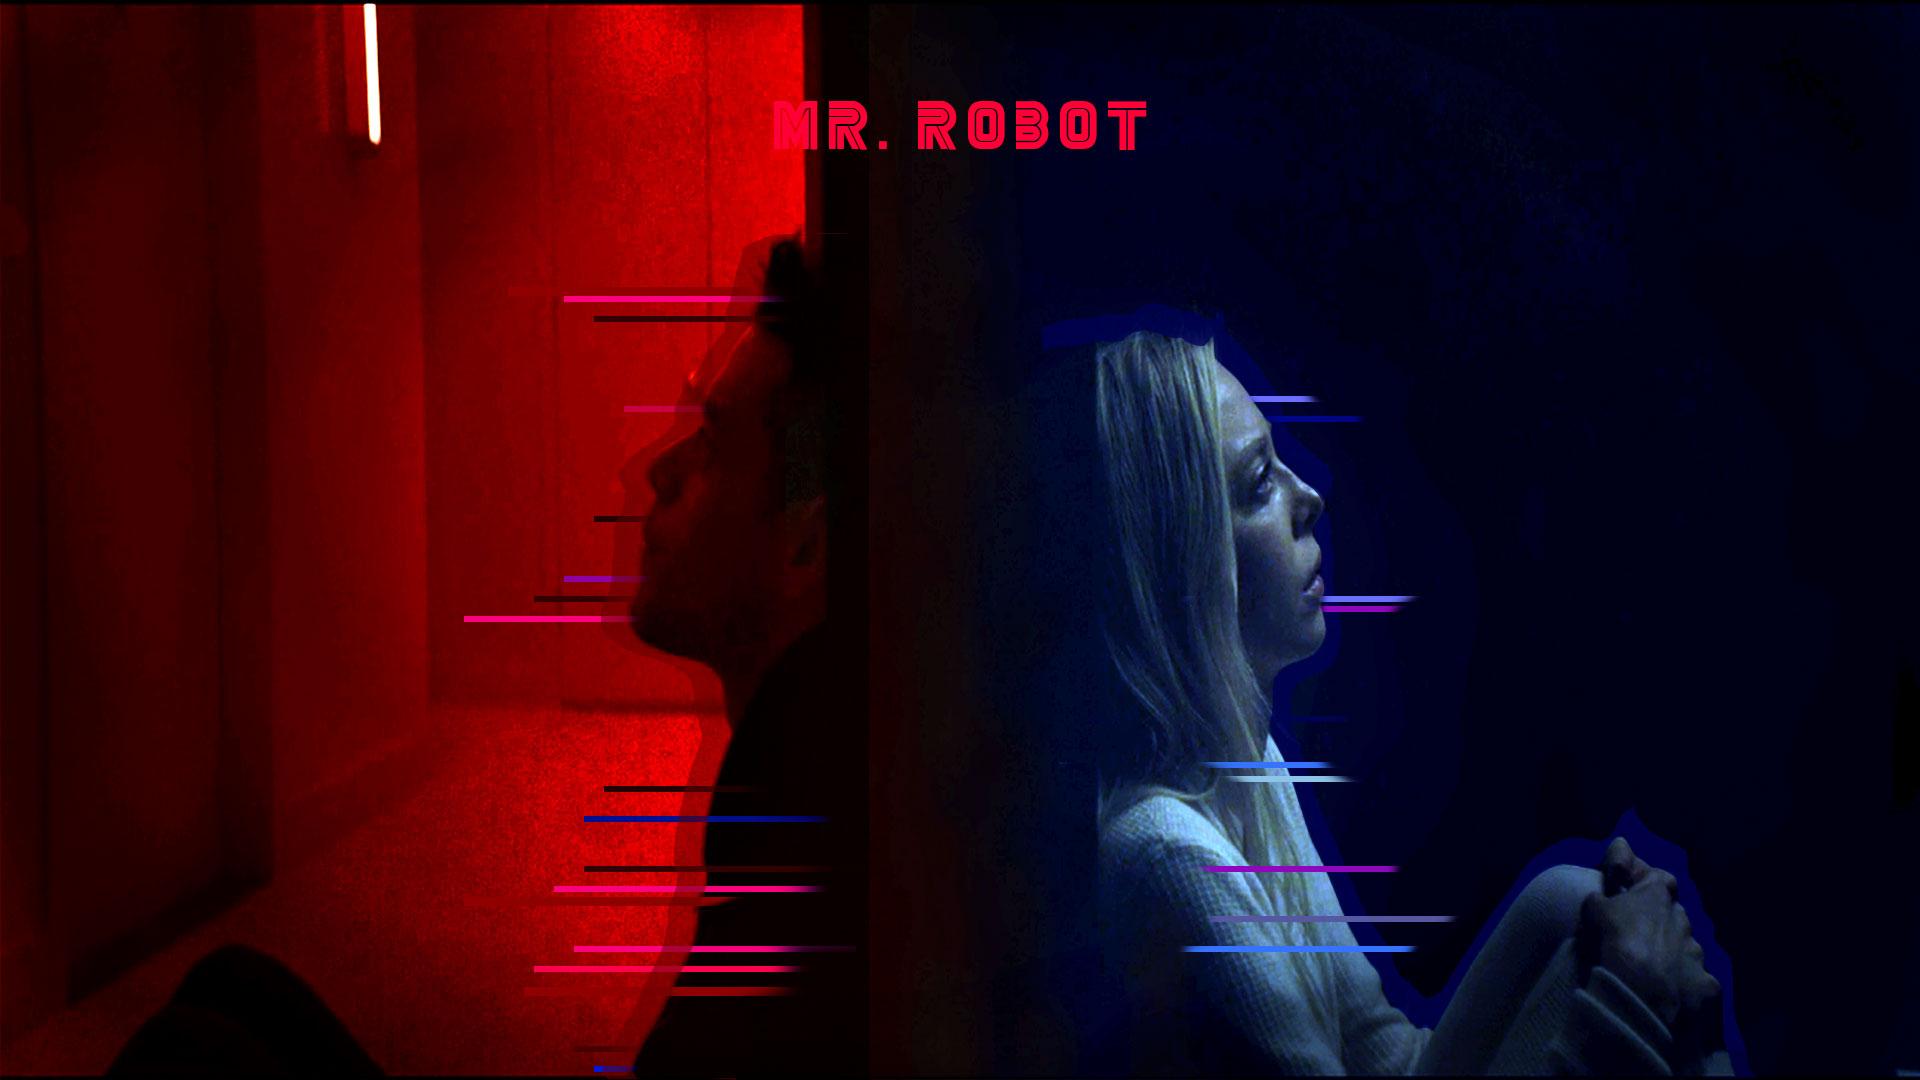 Mr Robot Season 3 Wallpapers